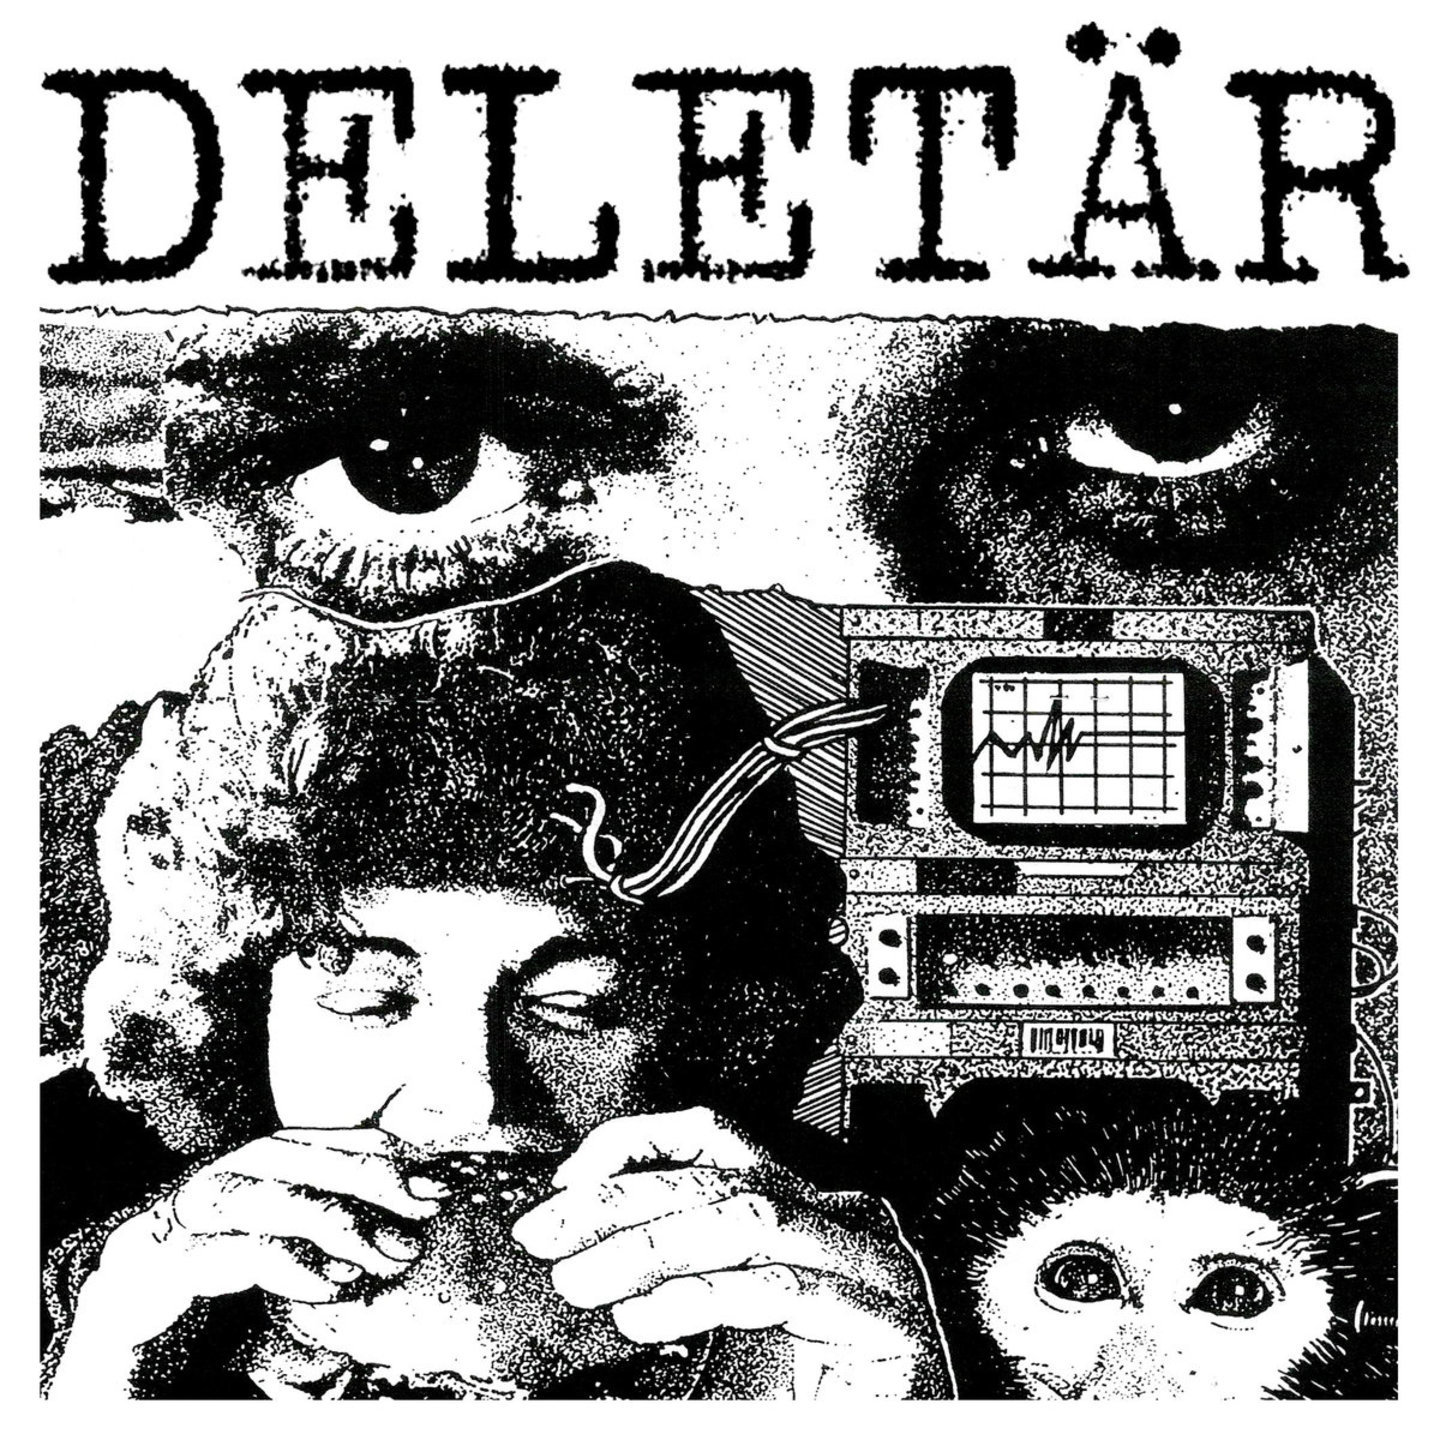 DELETAR - Deletar 7"